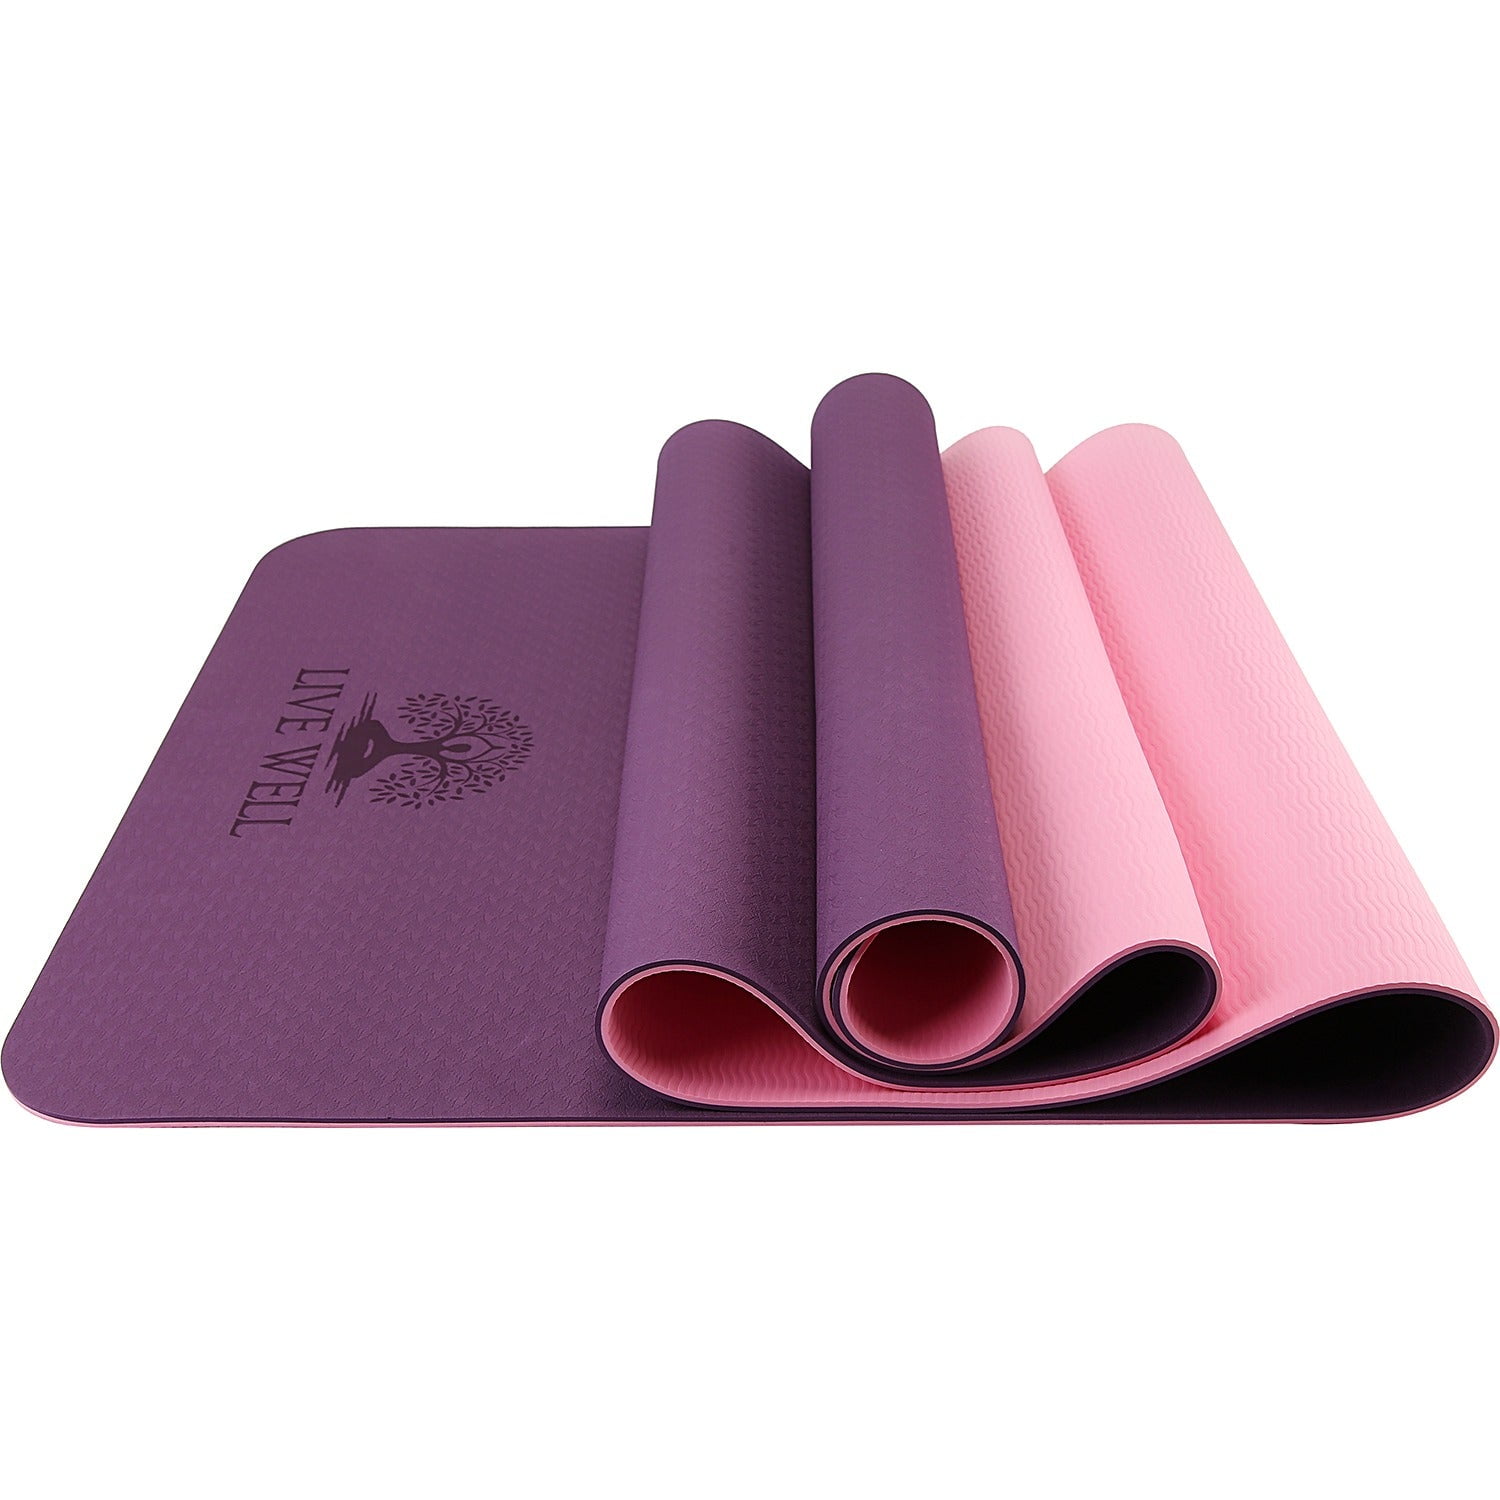 Sports Fitness Gym Yoga Bag Waterproof Pilates Mat Case Bag